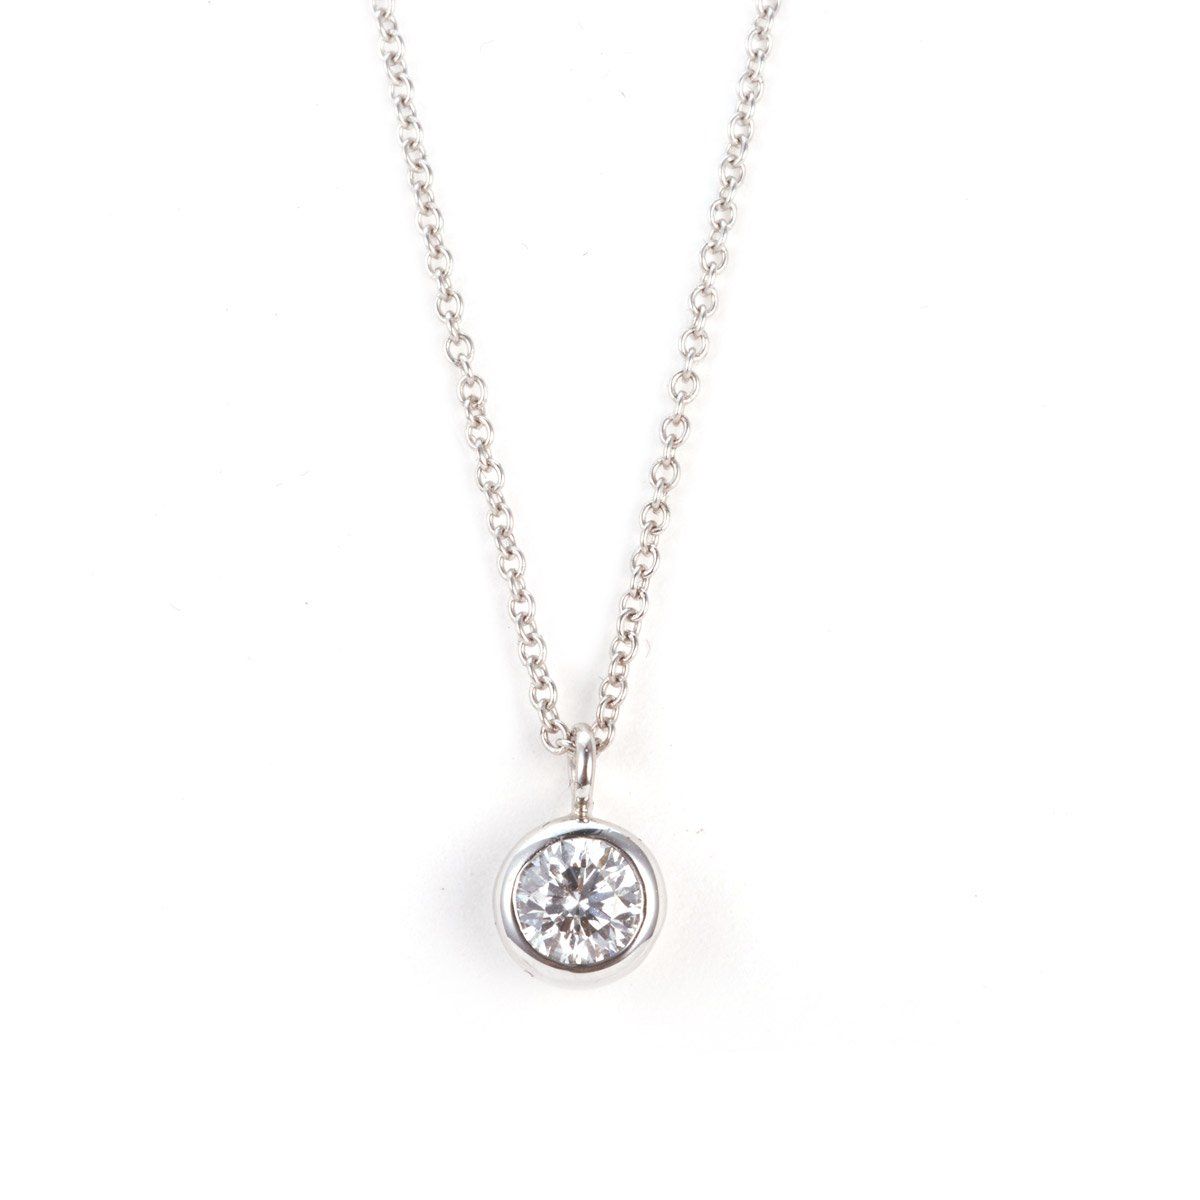  White Diamond Necklace, 0.35 Carat, Round shape, IGI Certified, 185545961